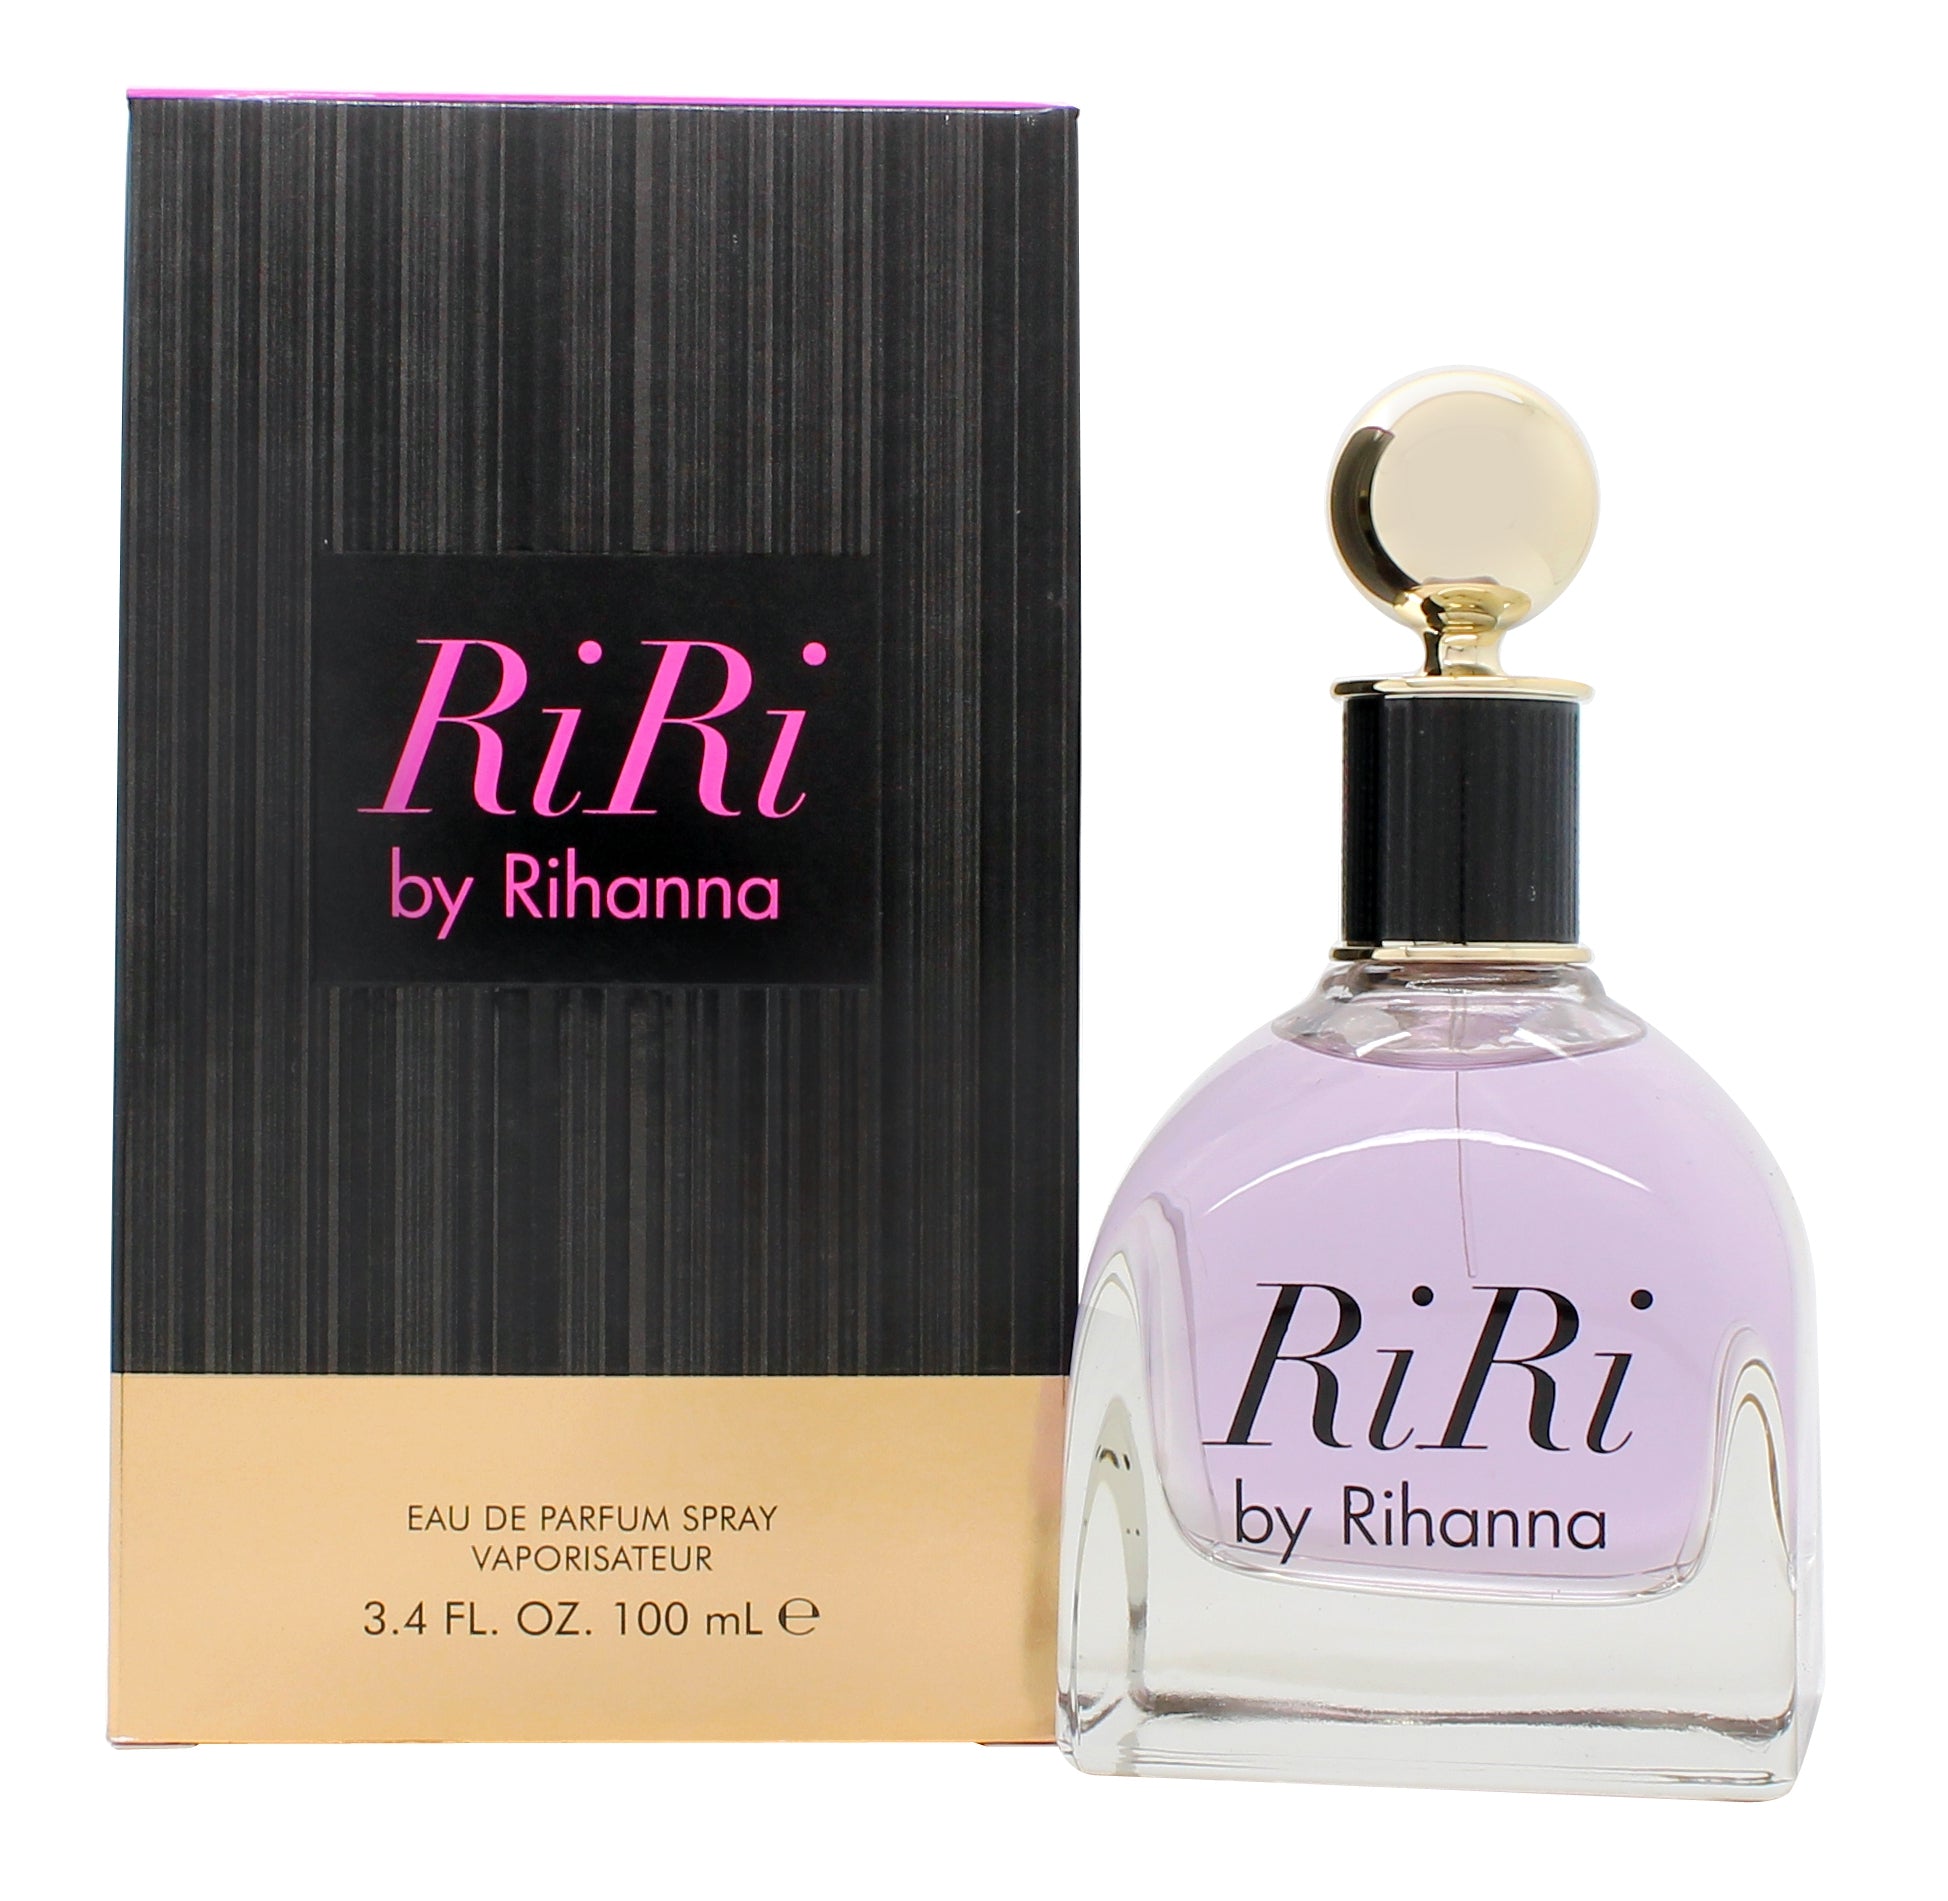 View Rihanna RiRi Eau de Parfum 100ml Spray information